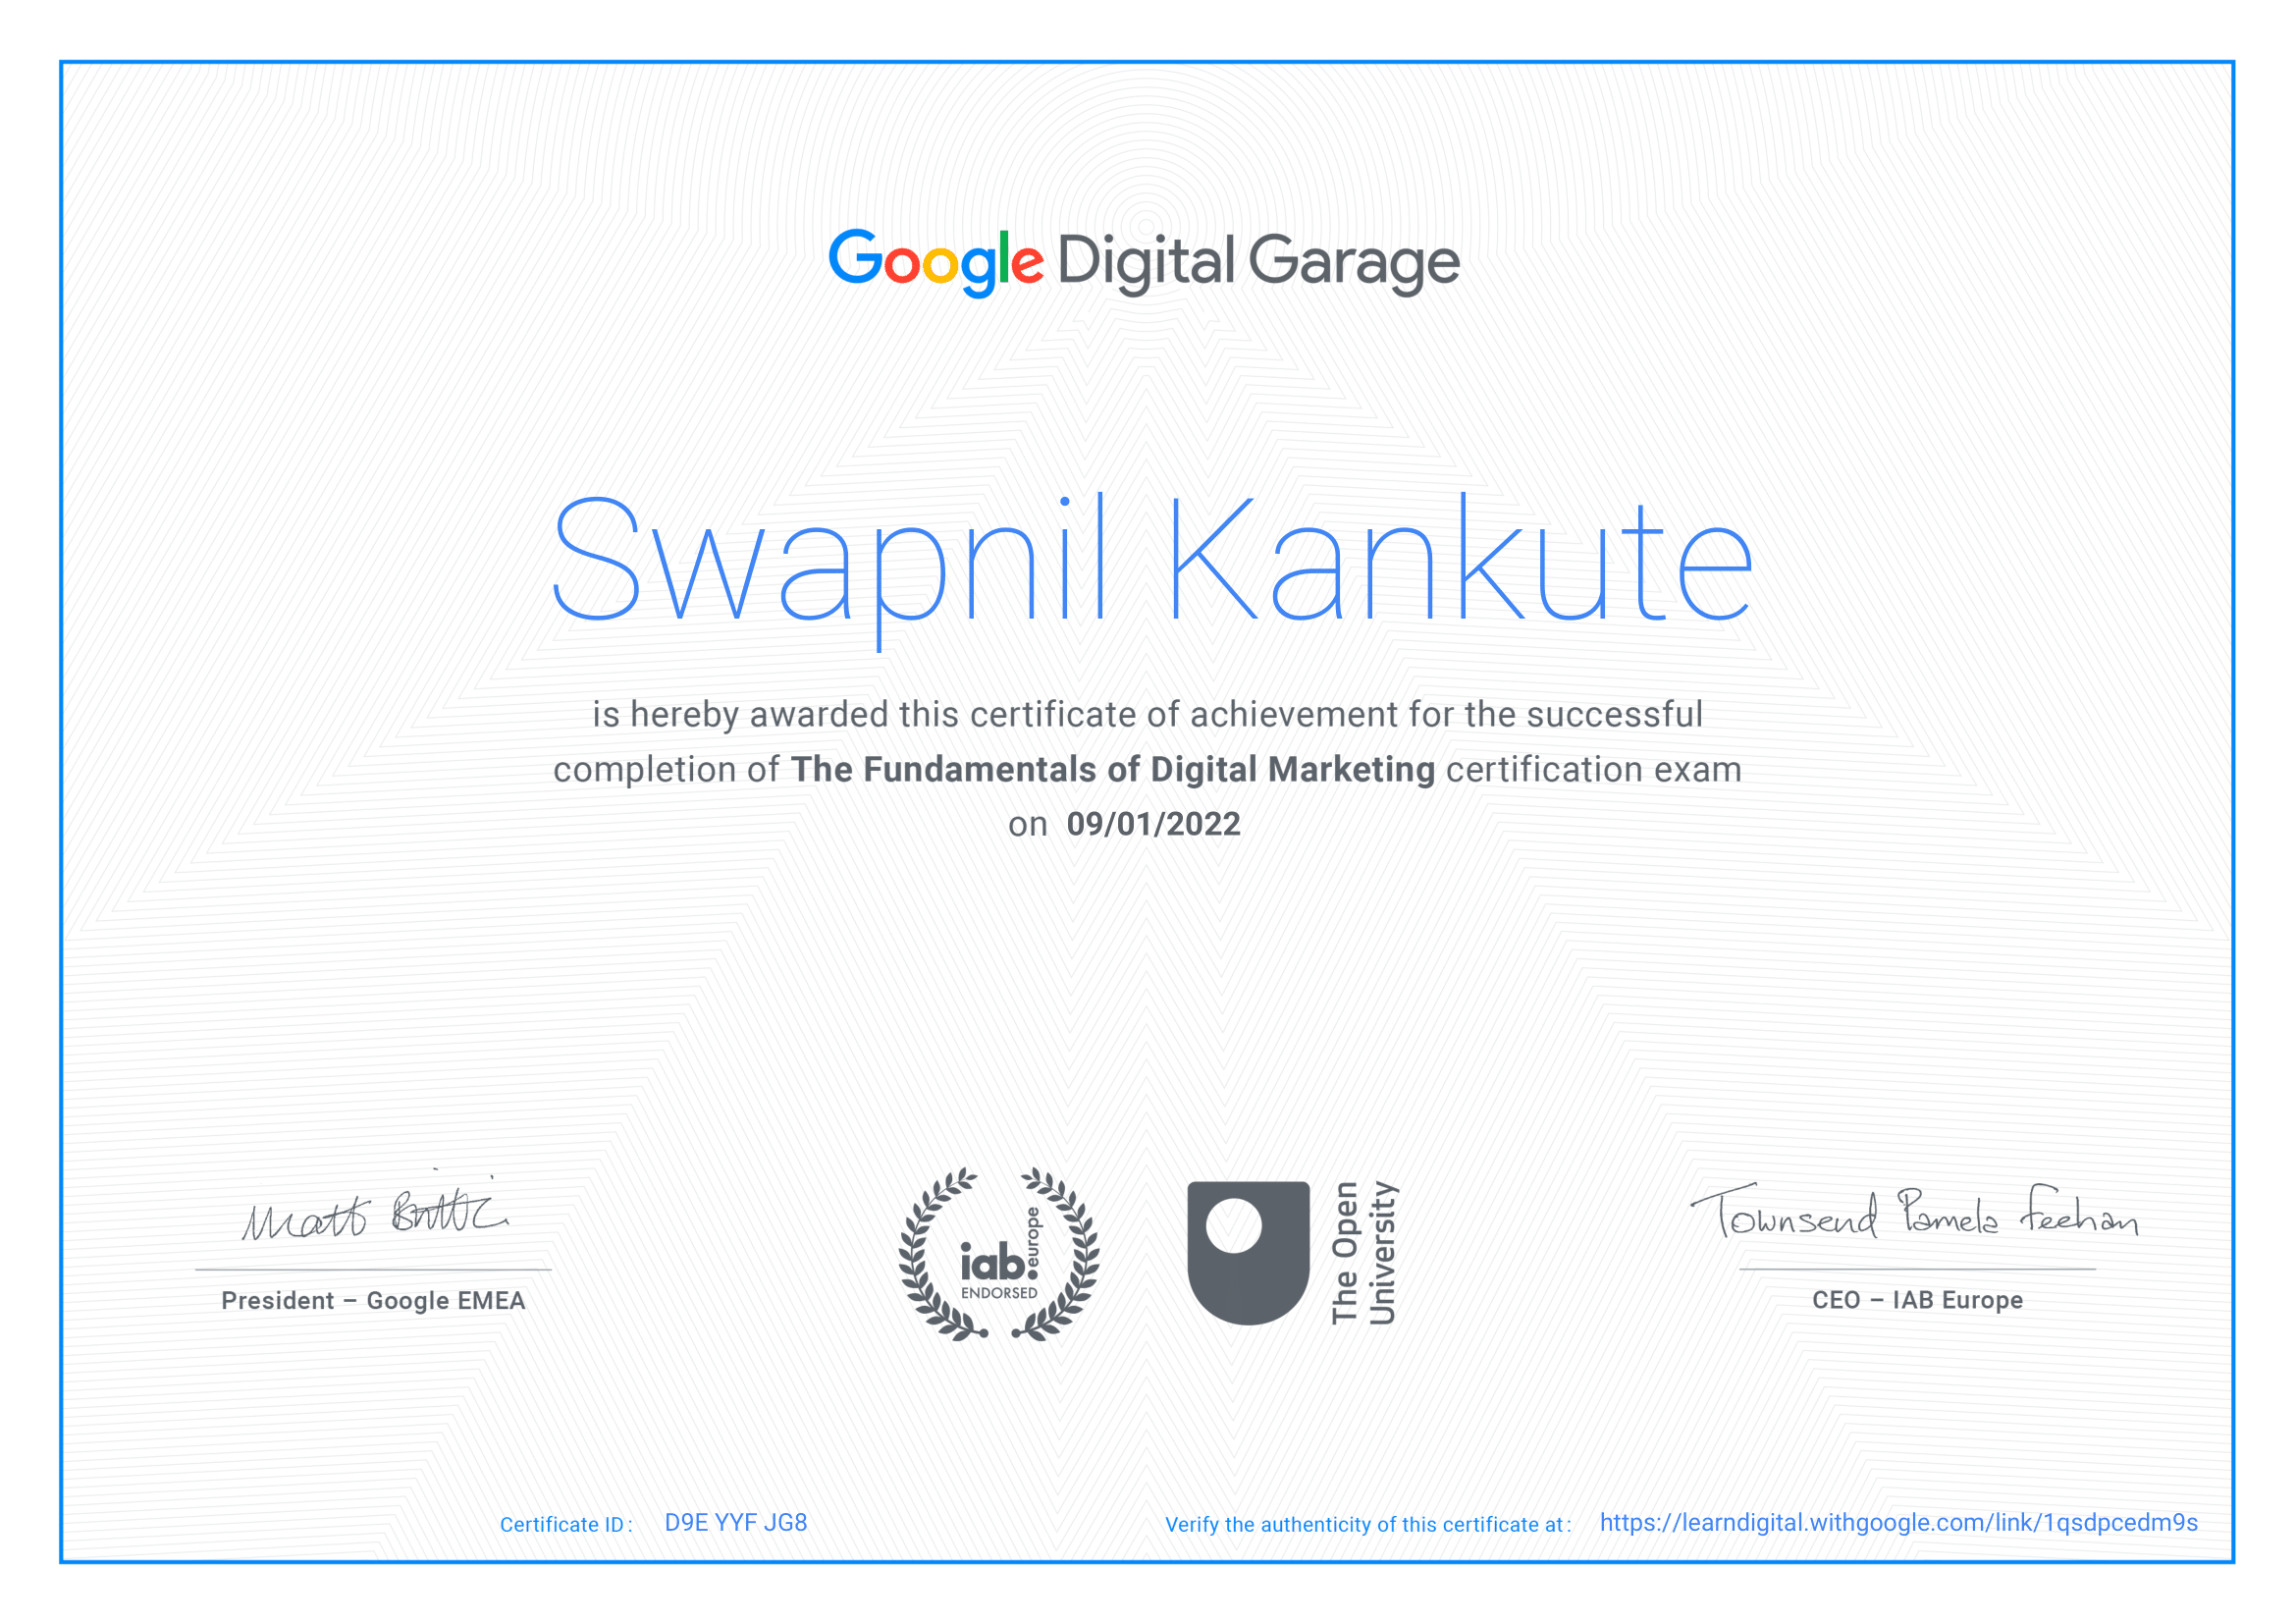 Fundamental Digital Marketing Certificate - Swapnil Kankute